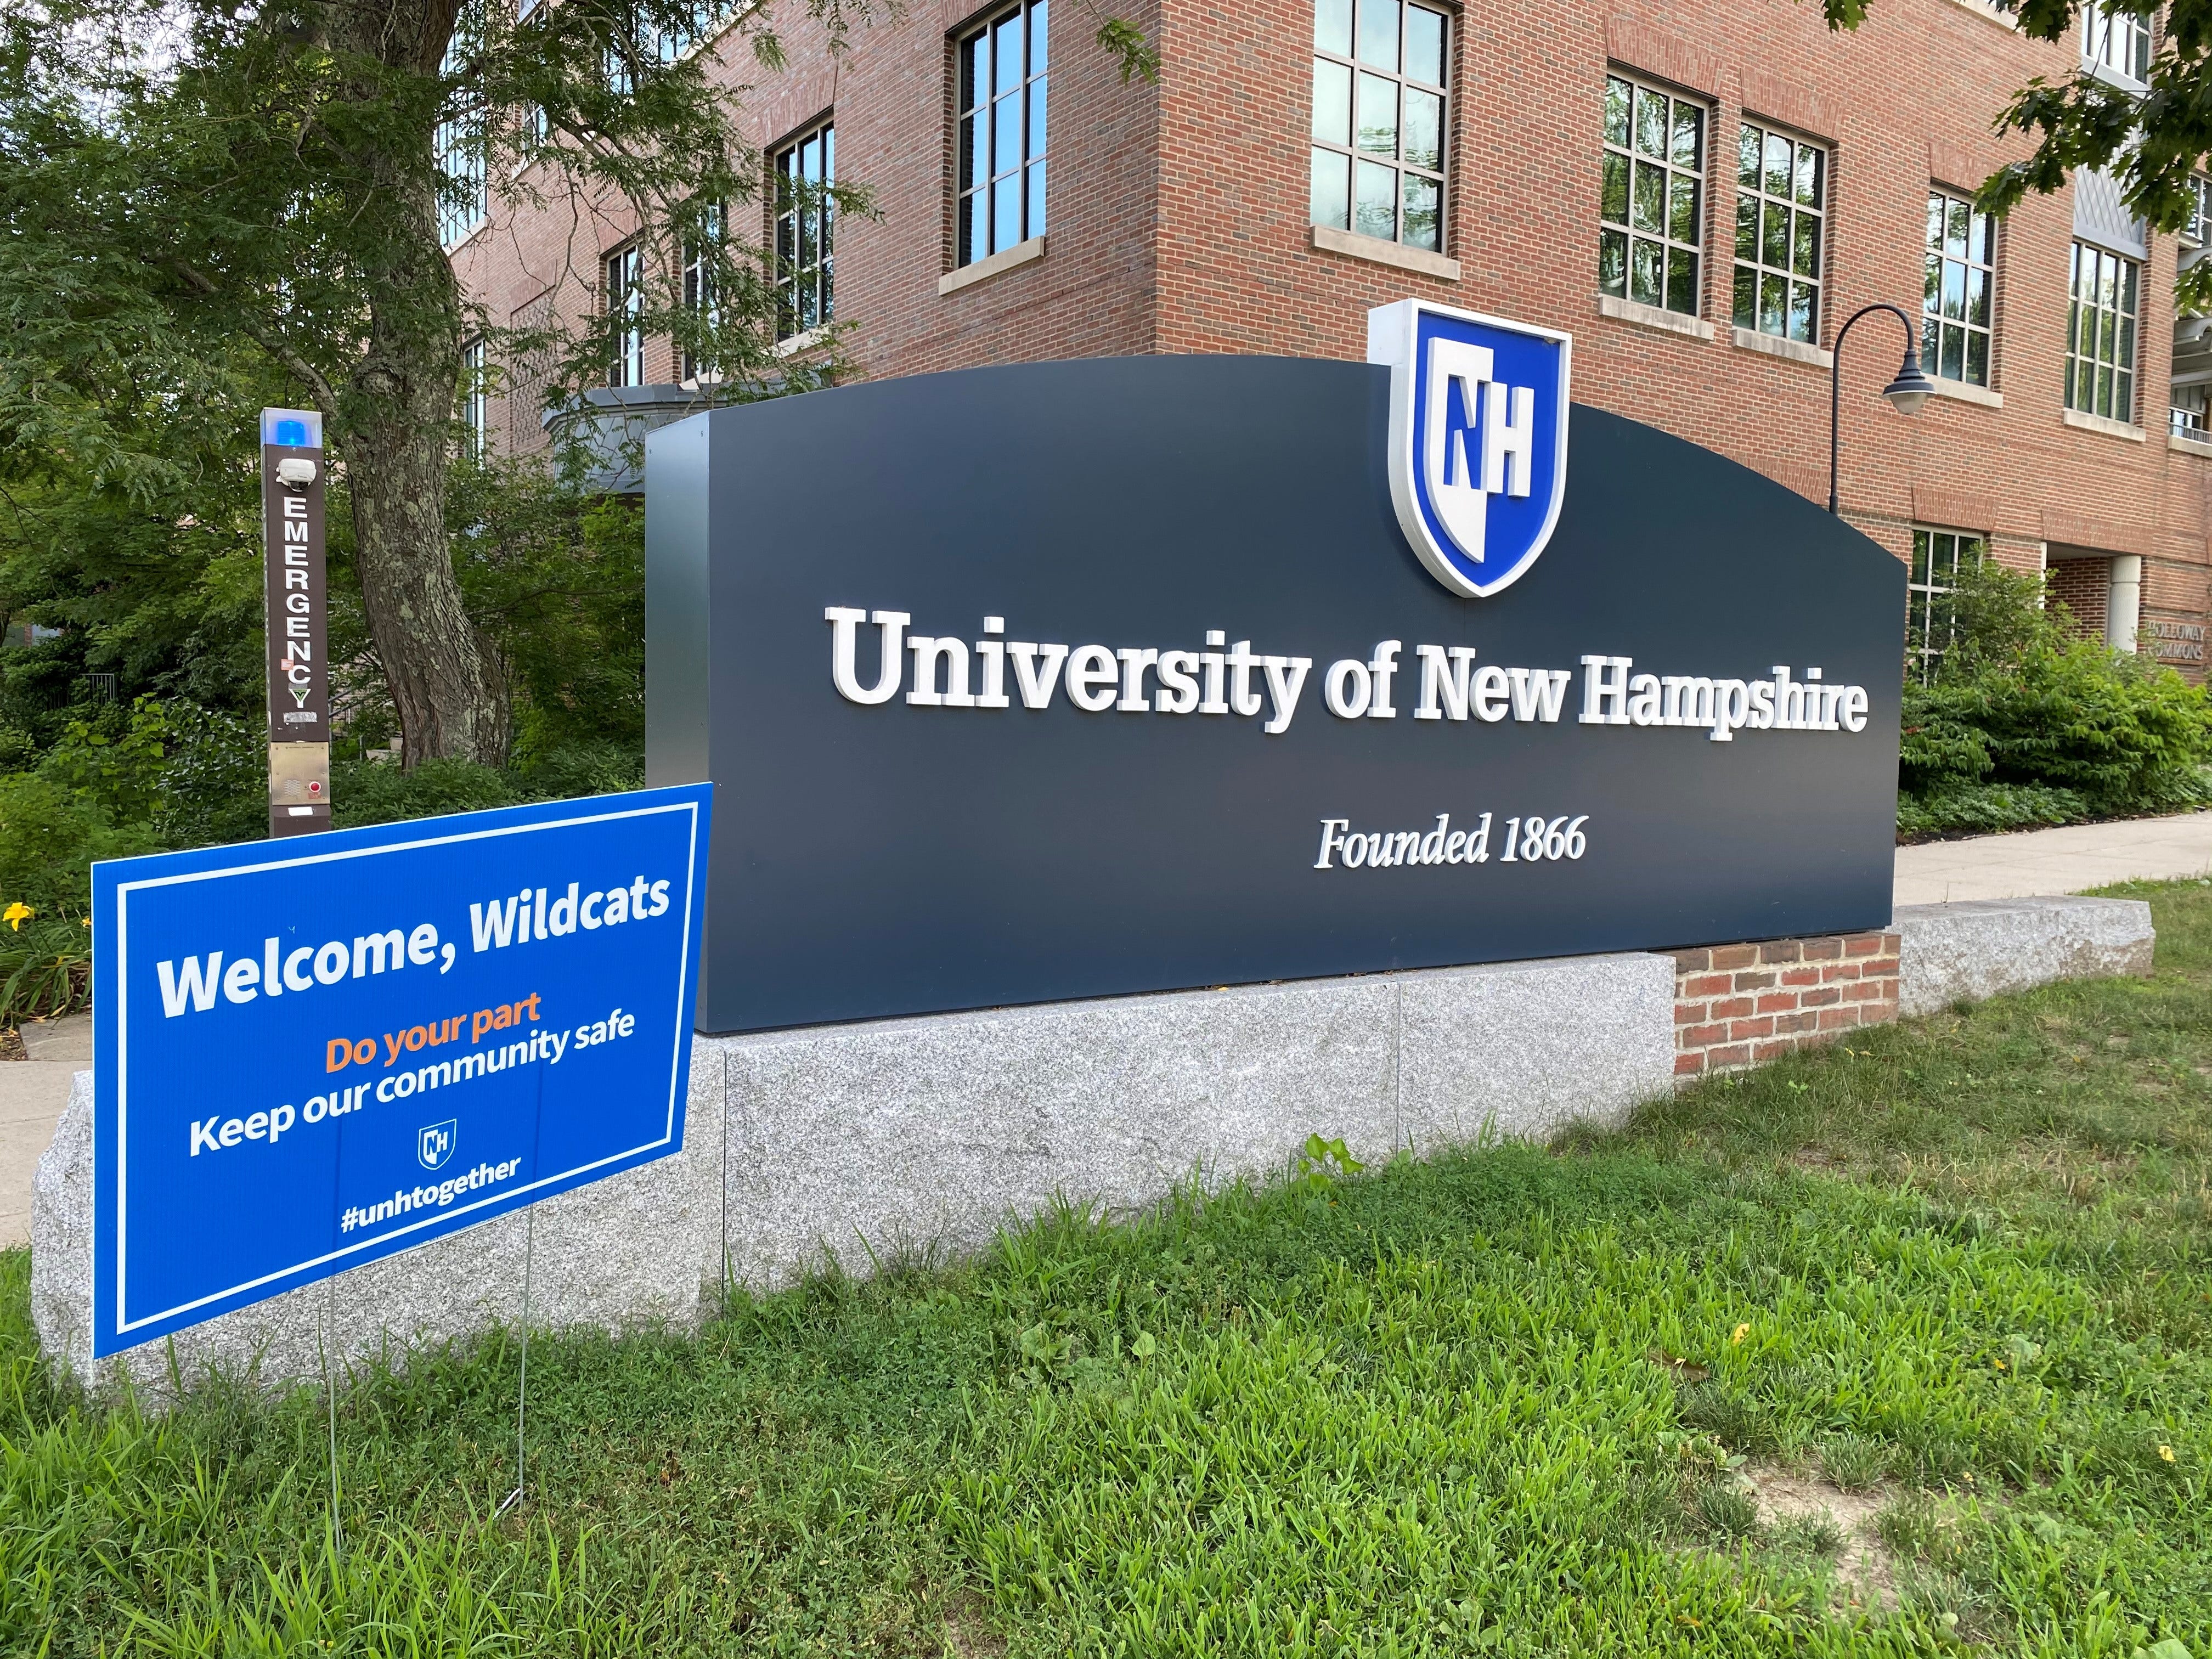 46 University of New Hampshire frat members accused of student hazing